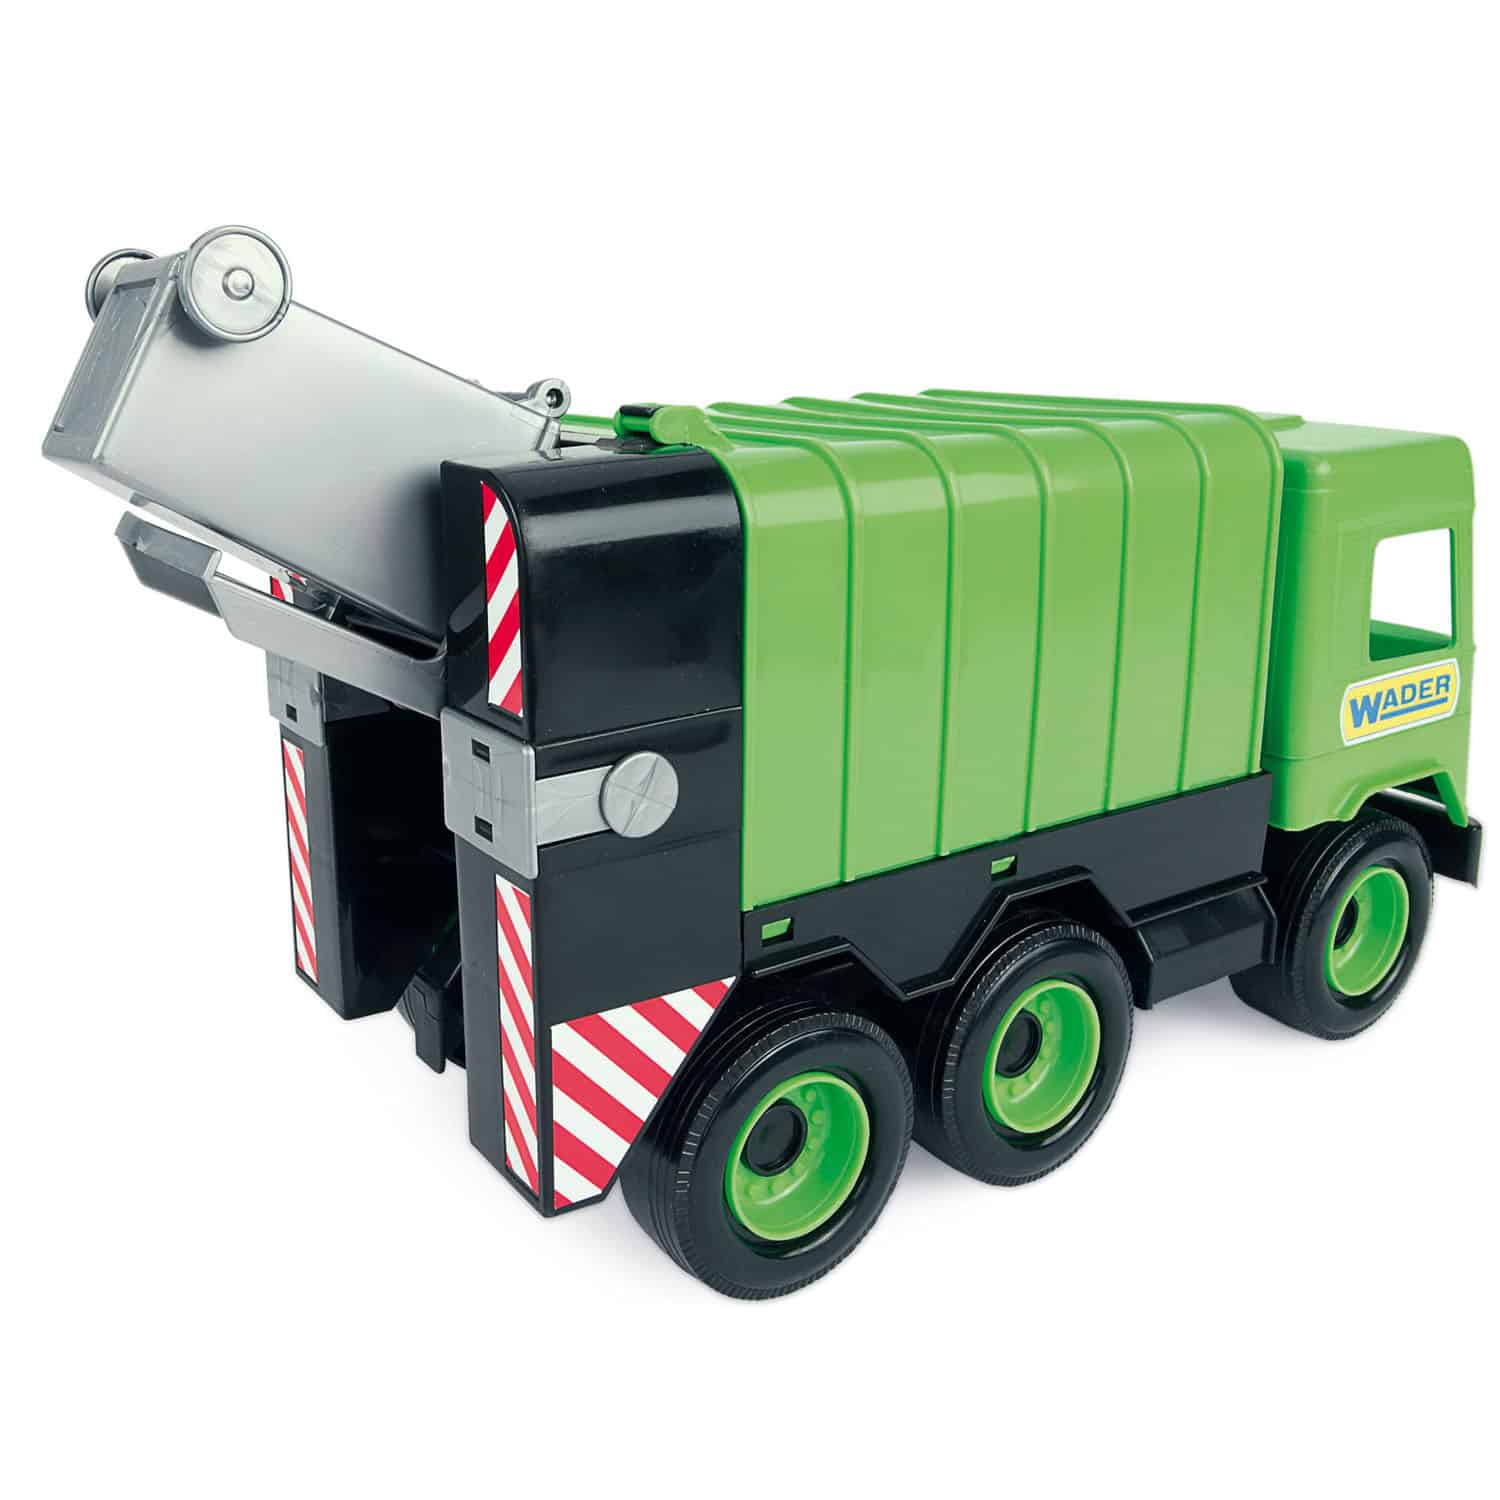 Мусоровоз зеленый. Мусоровоз Wader Middle Truck - 39224. Garbage Truck мусоровоз. Машина мусоровоз самосвал Green Plast гр05. Tonka зеленый мусоровоз.